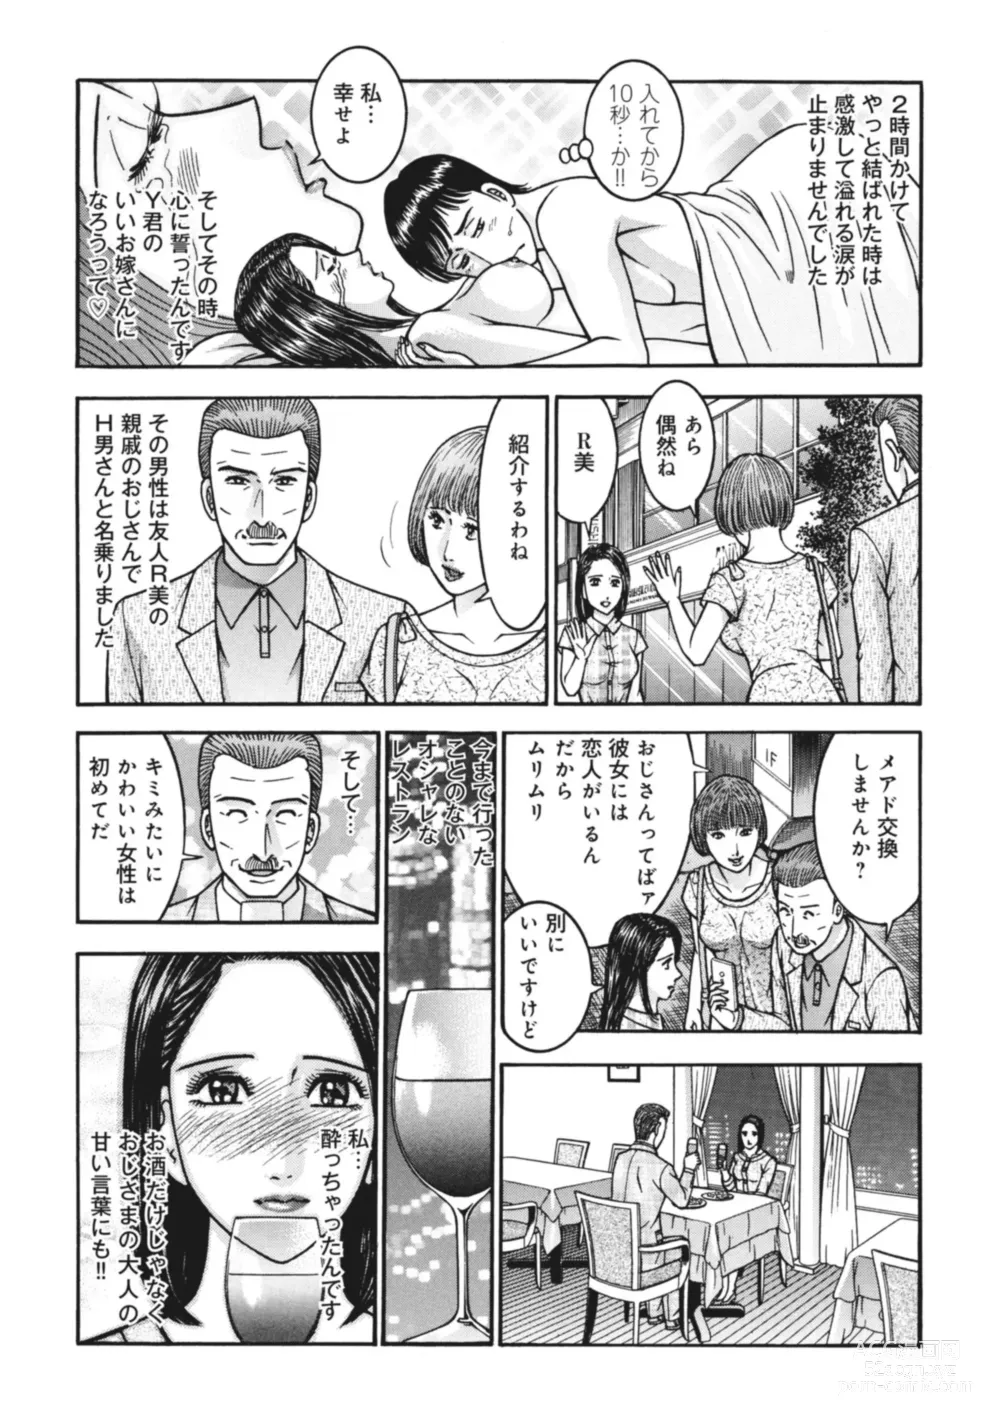 Page 5 of manga Renai Kaunserā Maki no Teisō Fairu 1